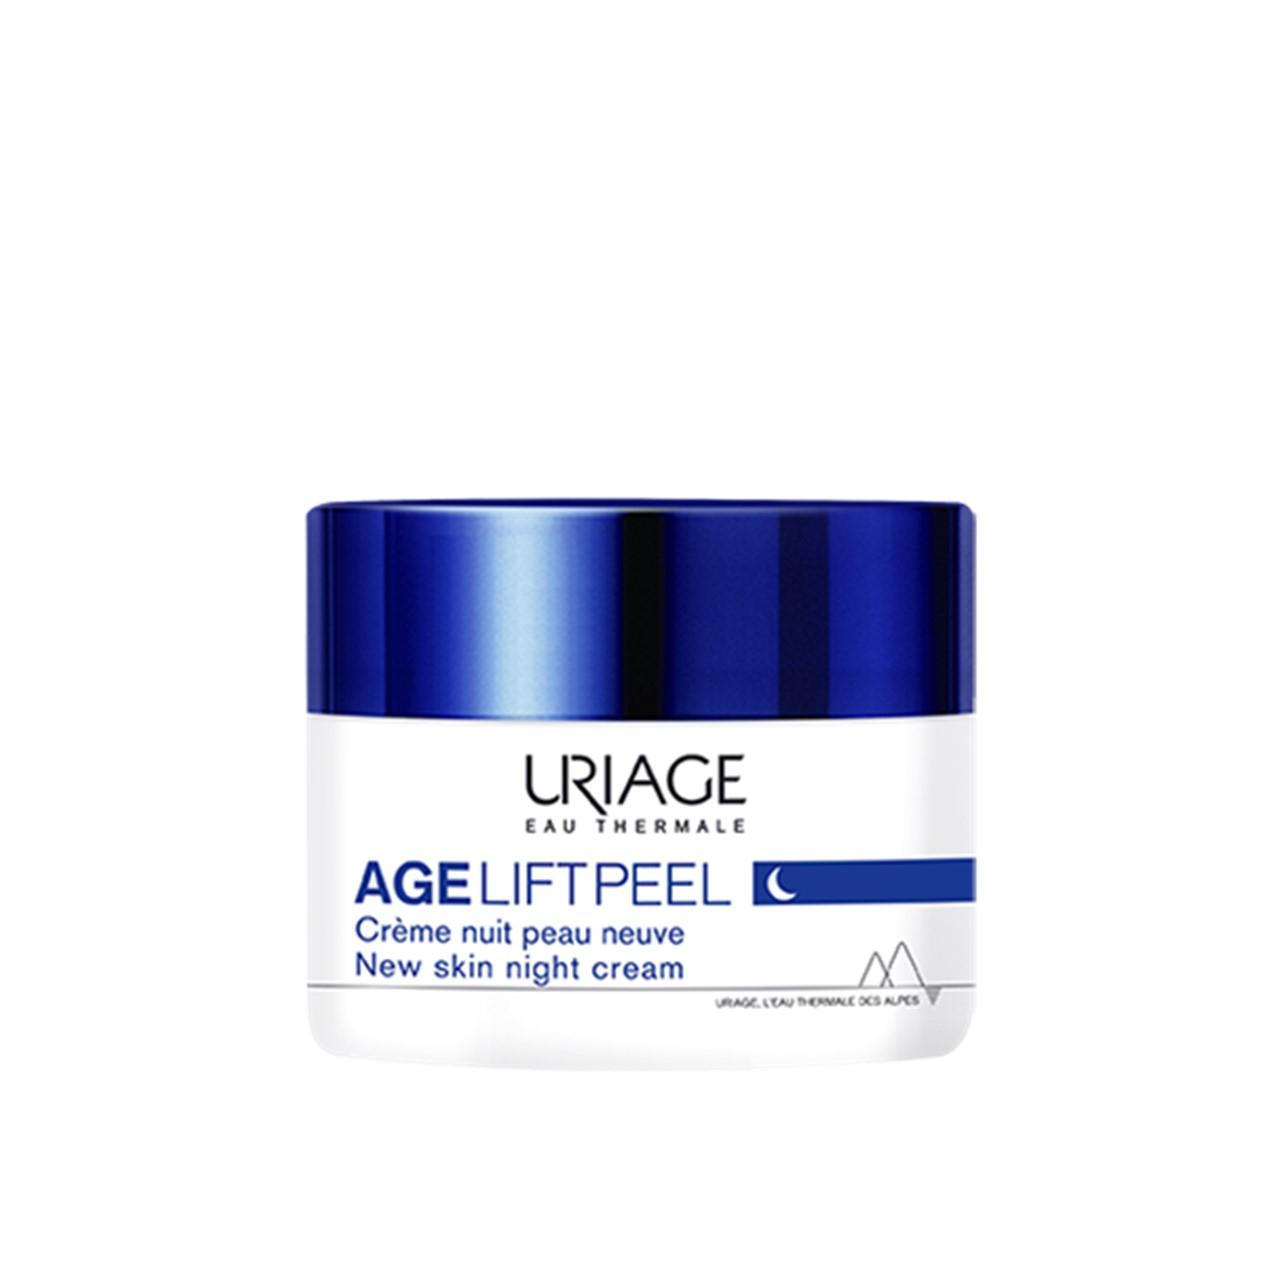 Uriage Age Lift Peel New Skin Night Cream 50ml (1.7 fl oz)